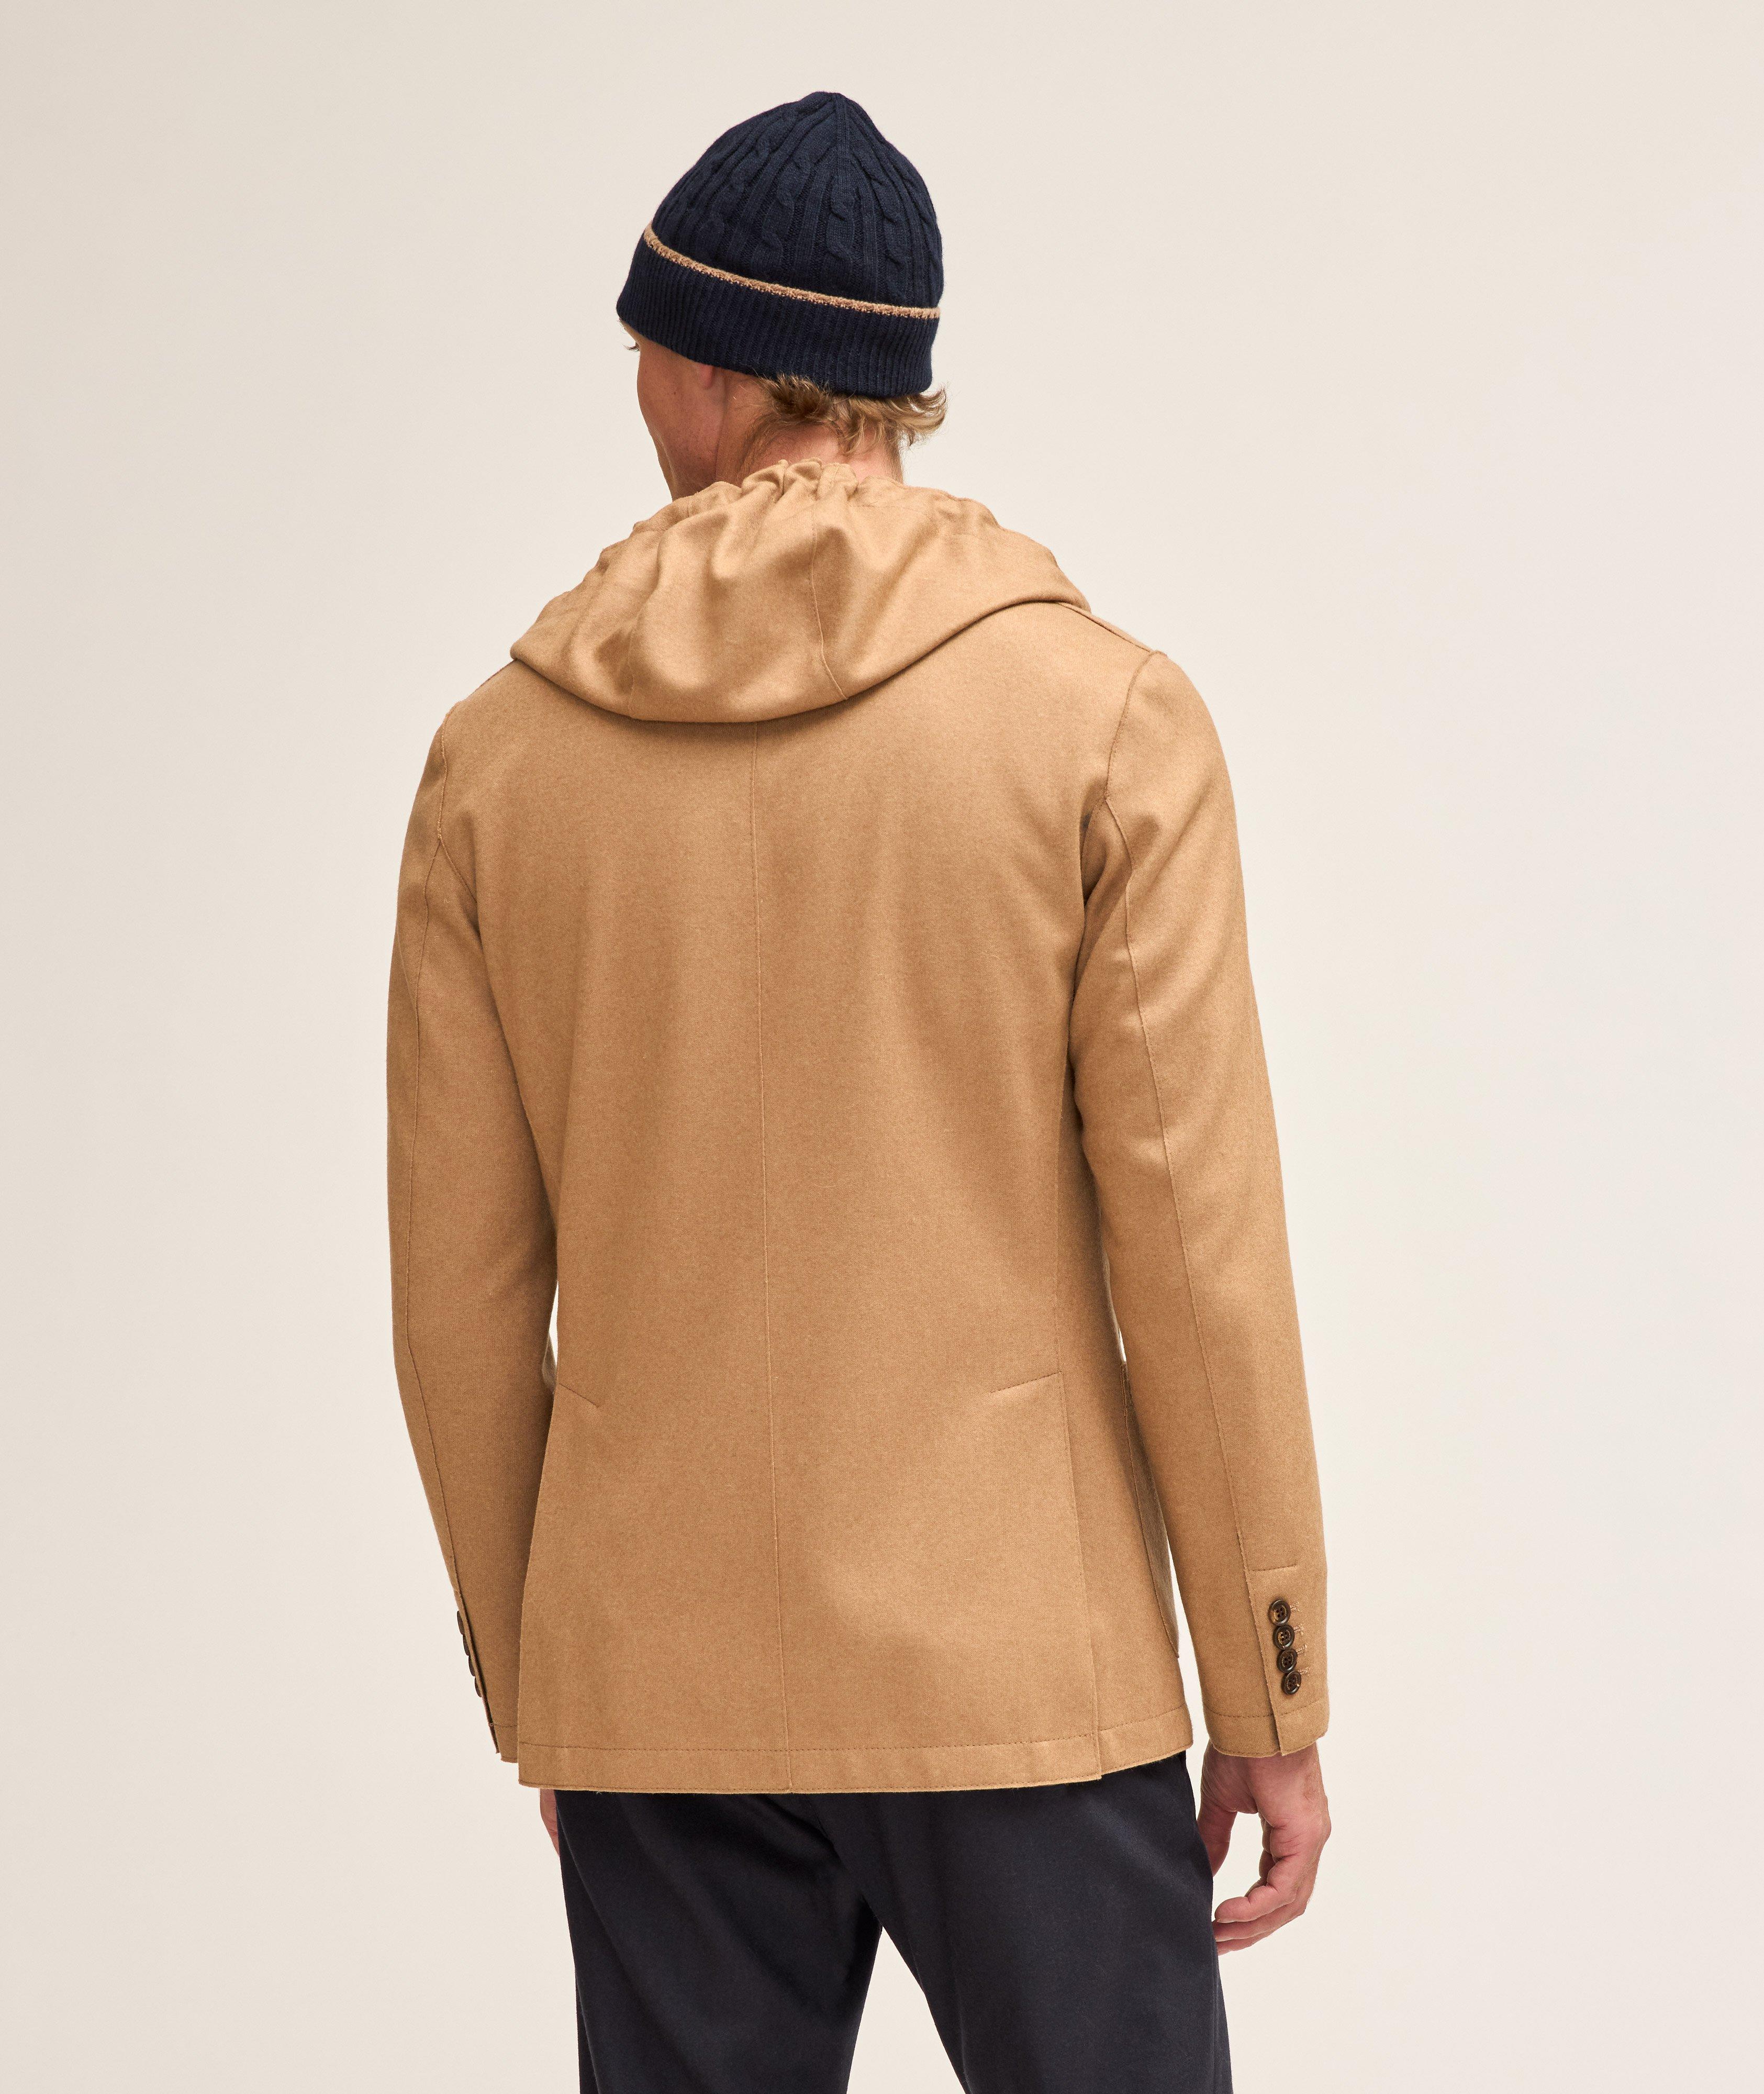 Wool-Blend Hooded Sport Jacket image 3